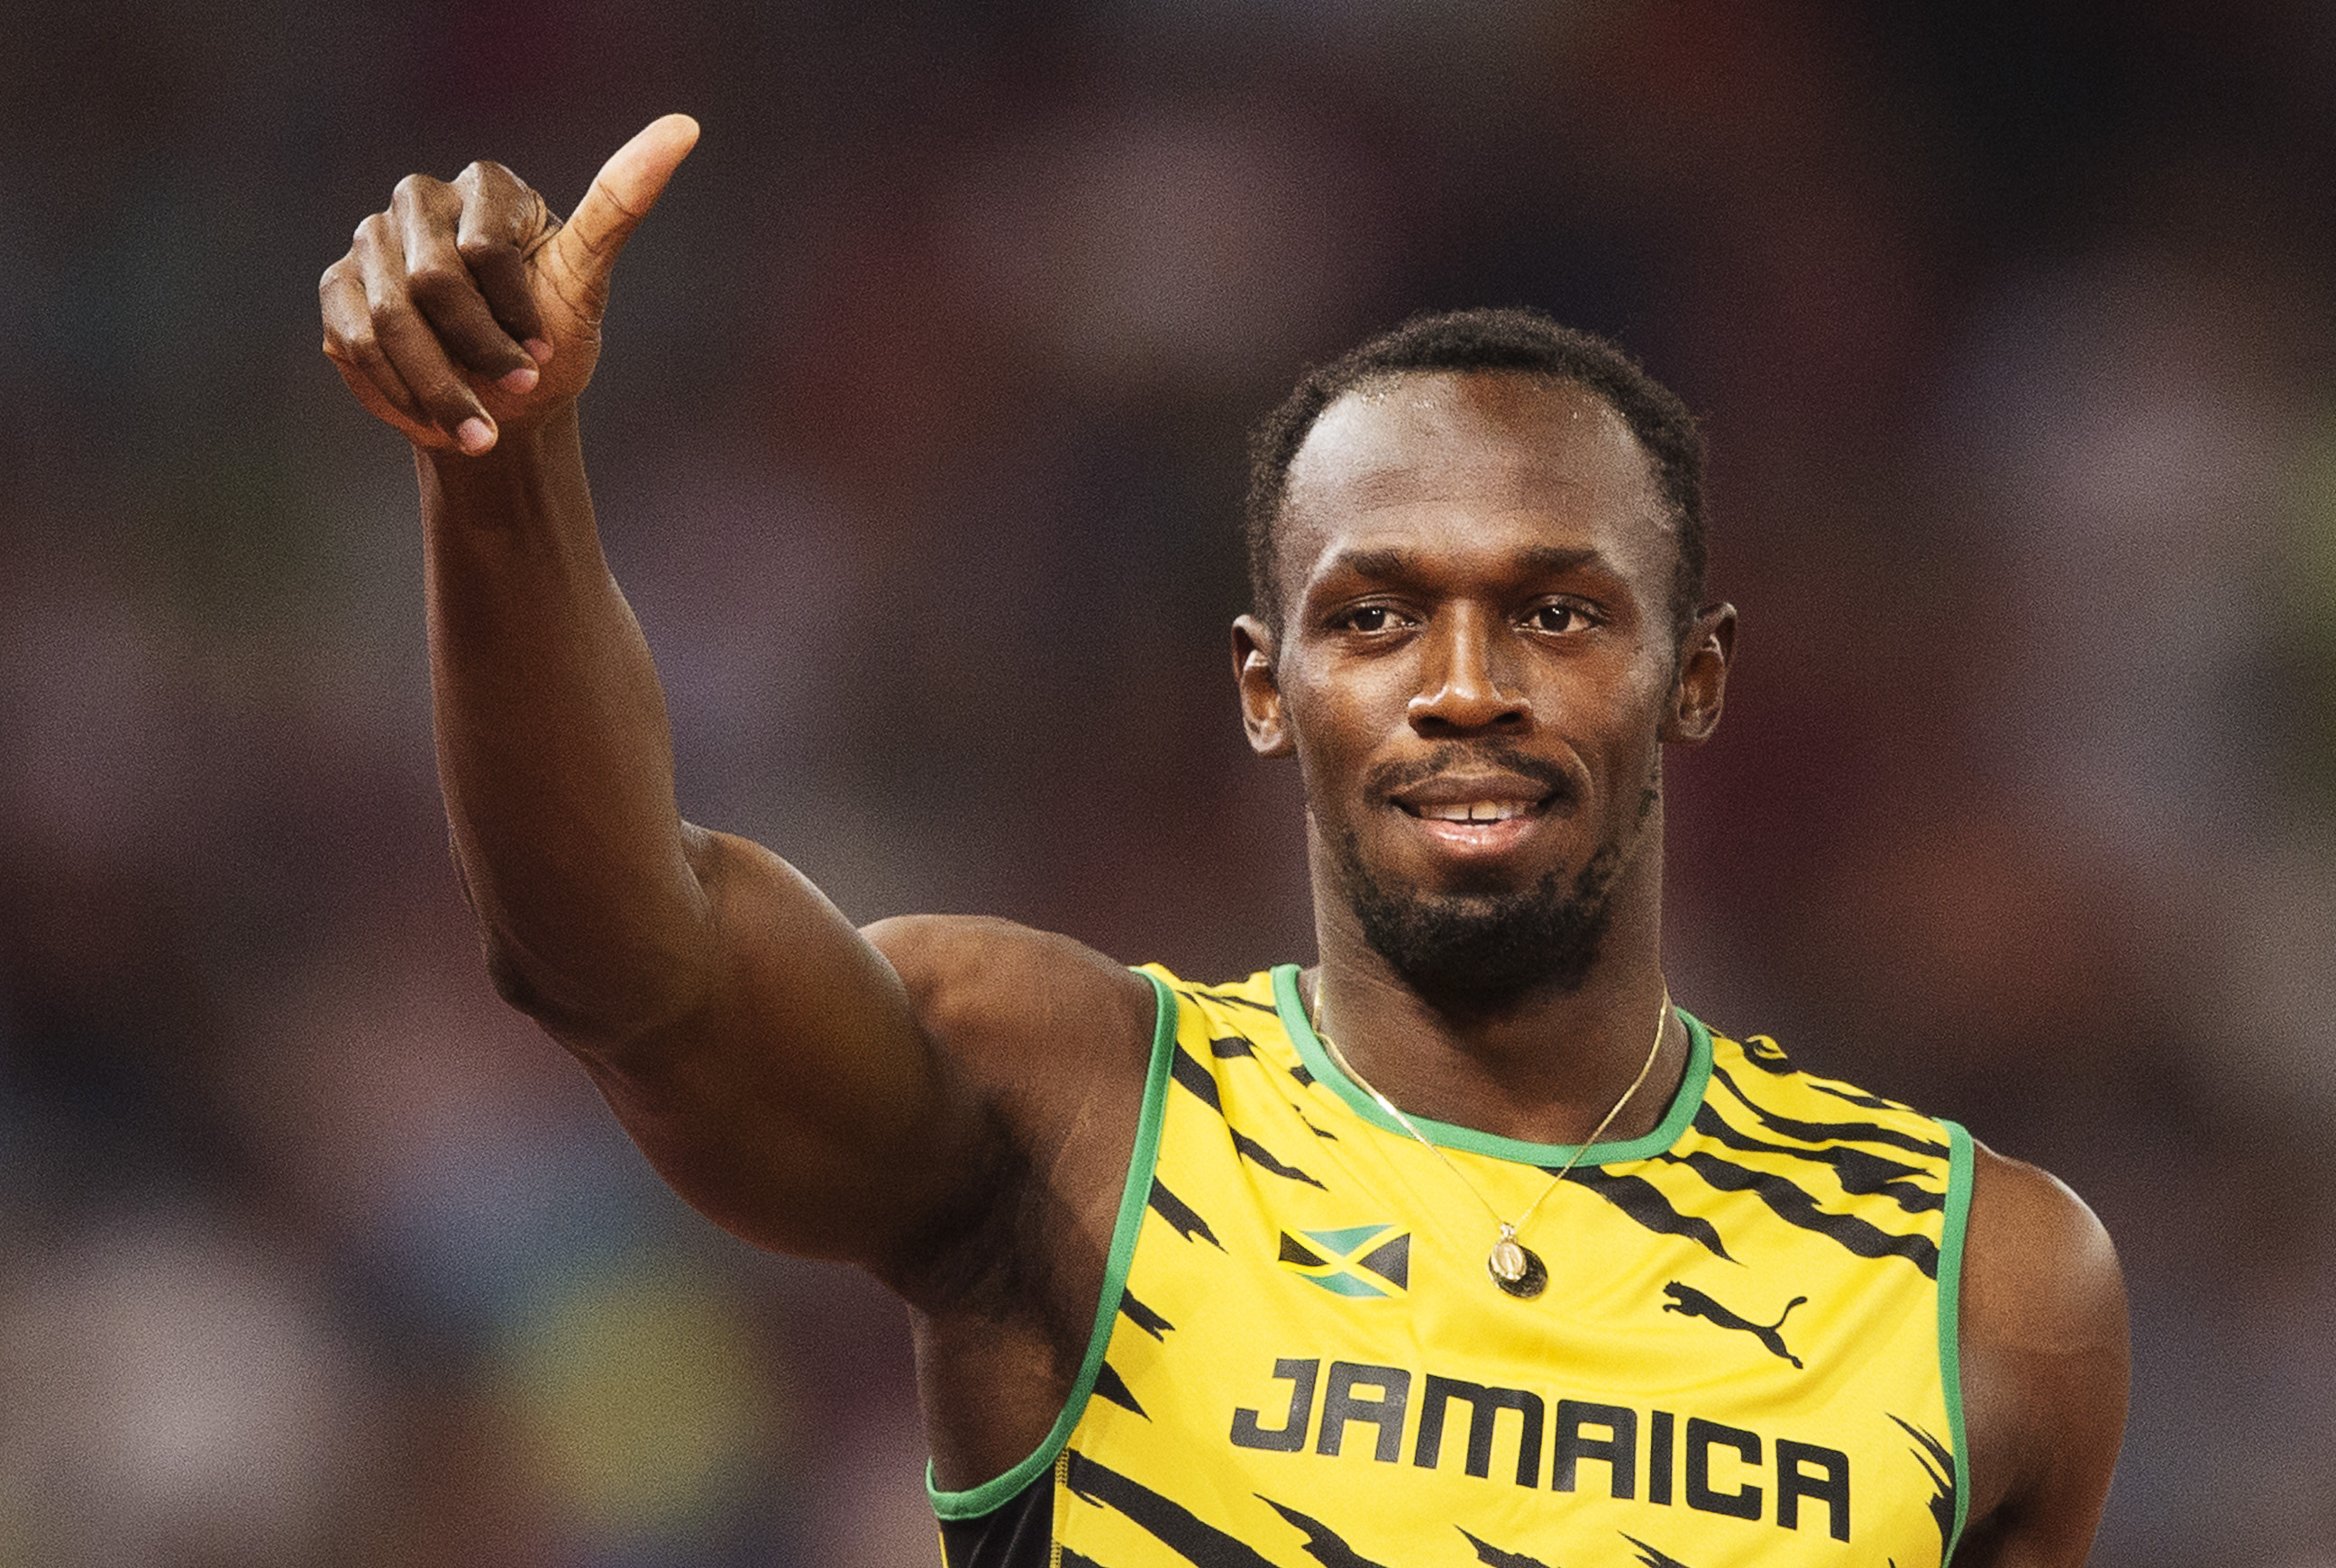 Segway, Fotograf, Usain Bolt